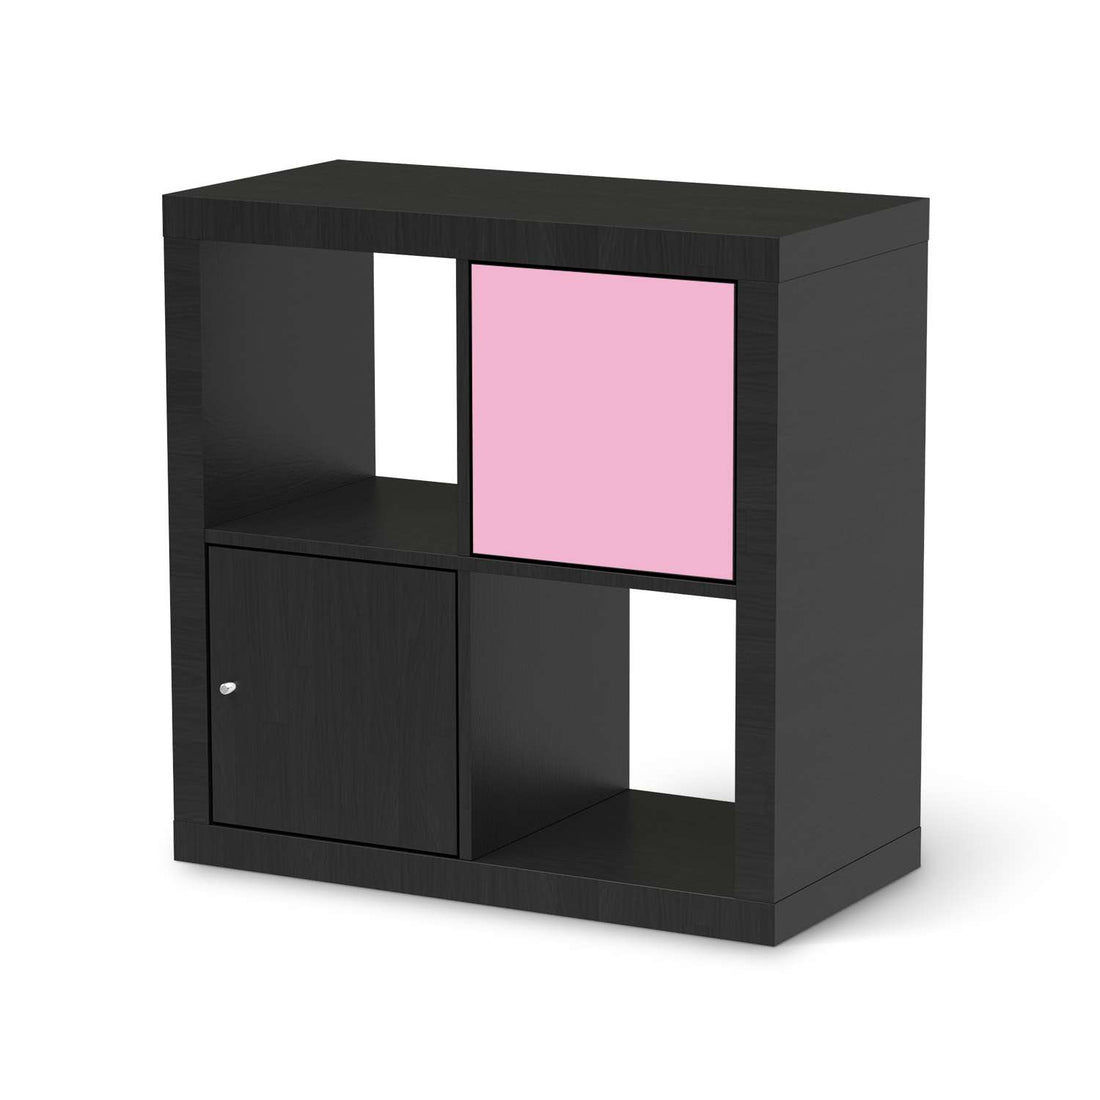 Selbstklebende Folie Pink Light - IKEA Kallax Regal 1 Türe - schwarz